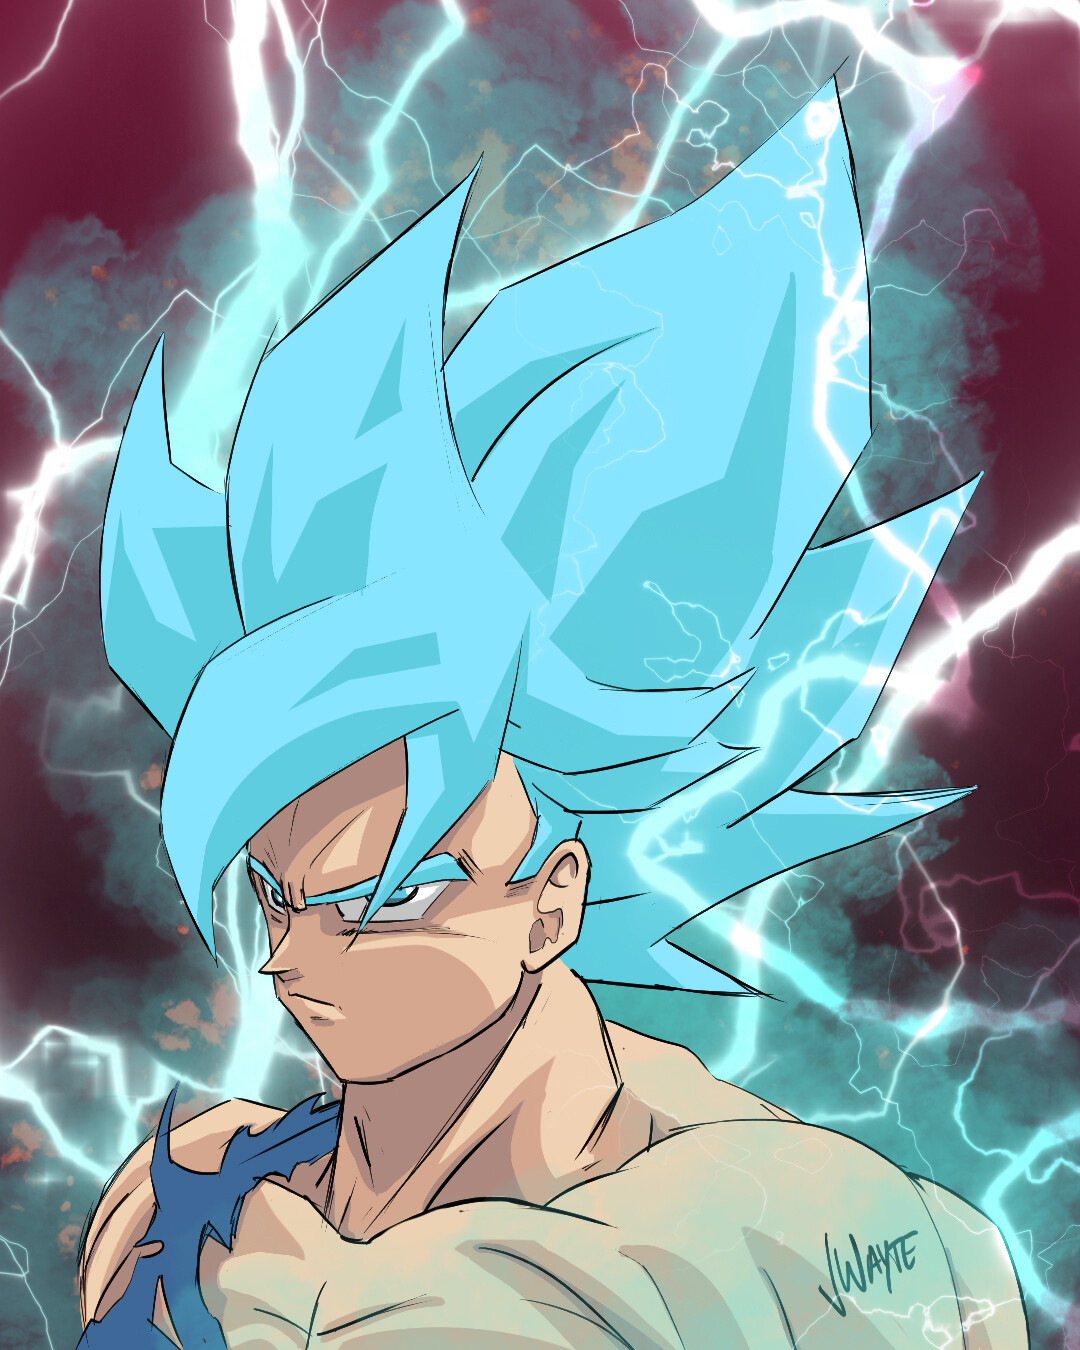 Goku super saiyan blue